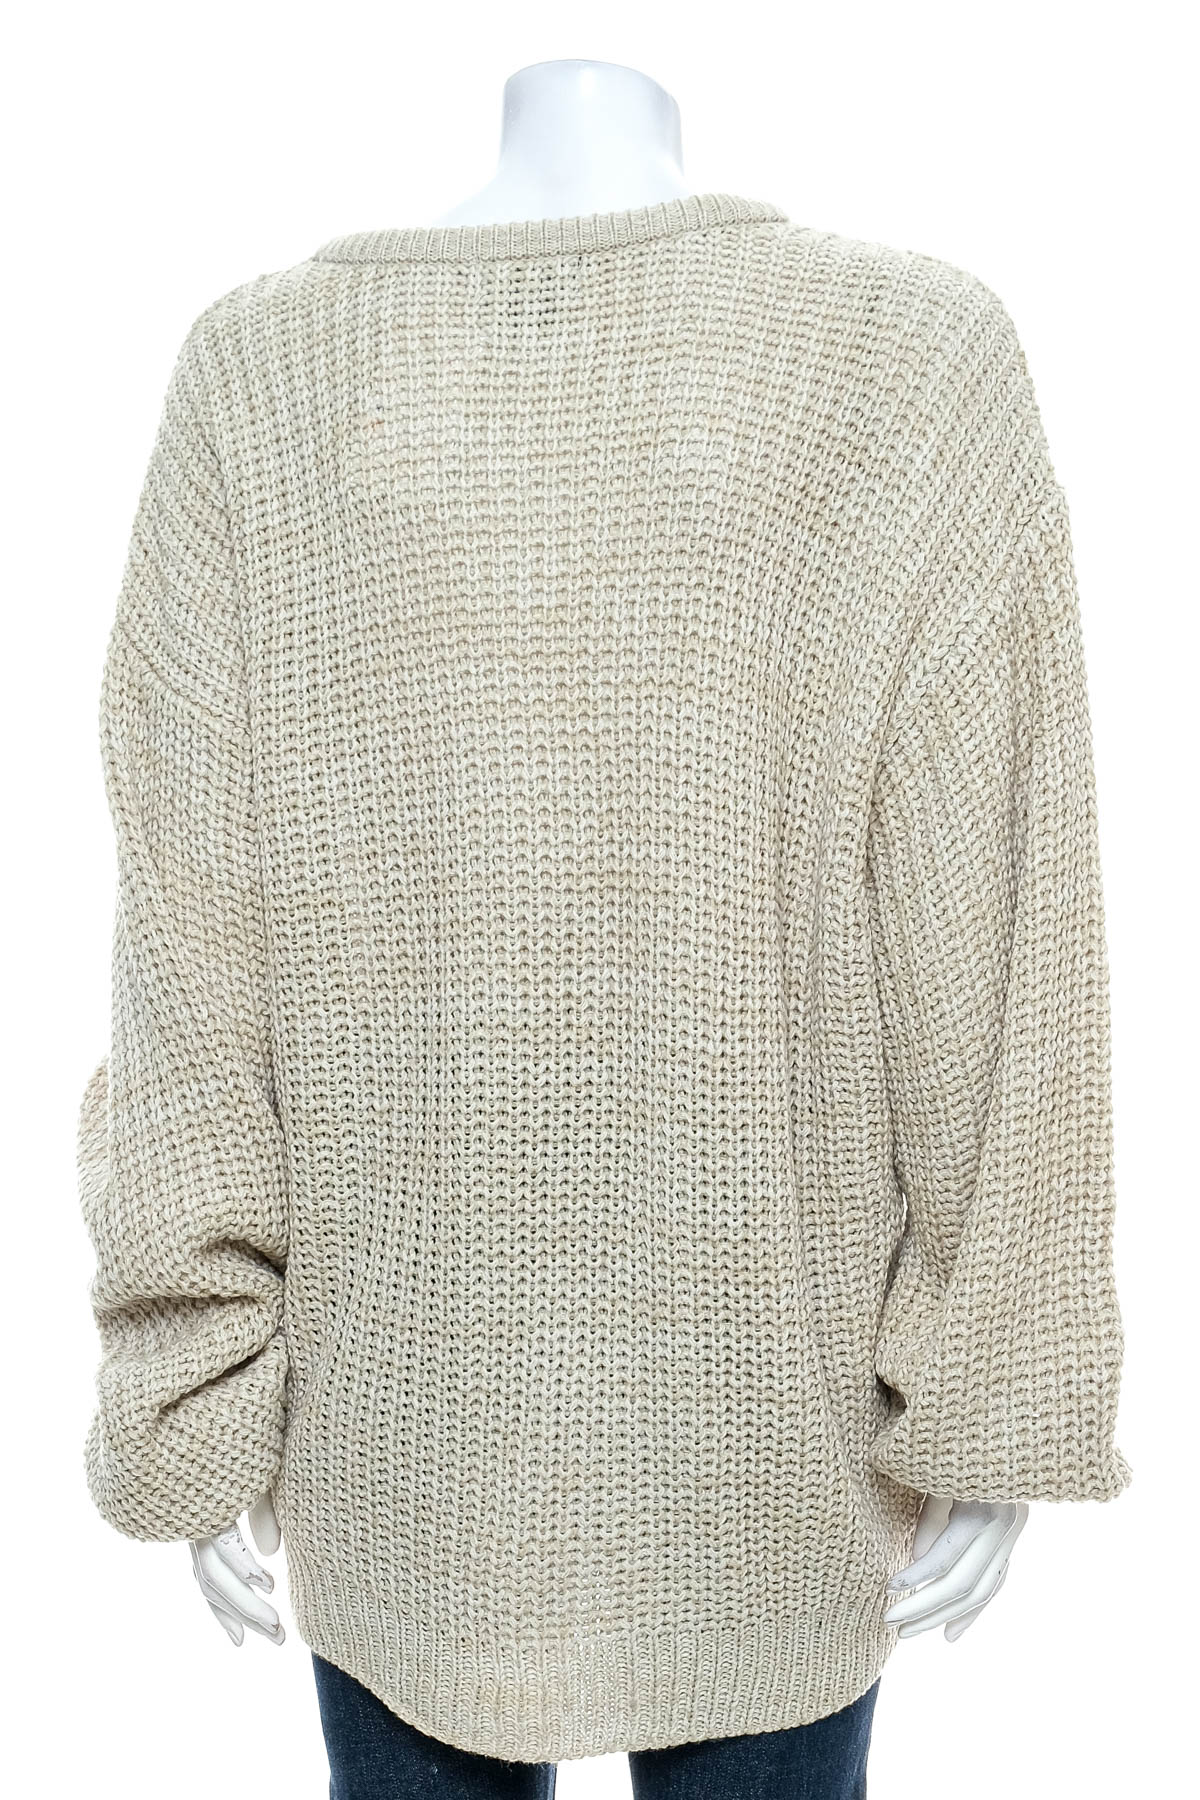 Women's sweater - Basic Editions - 1